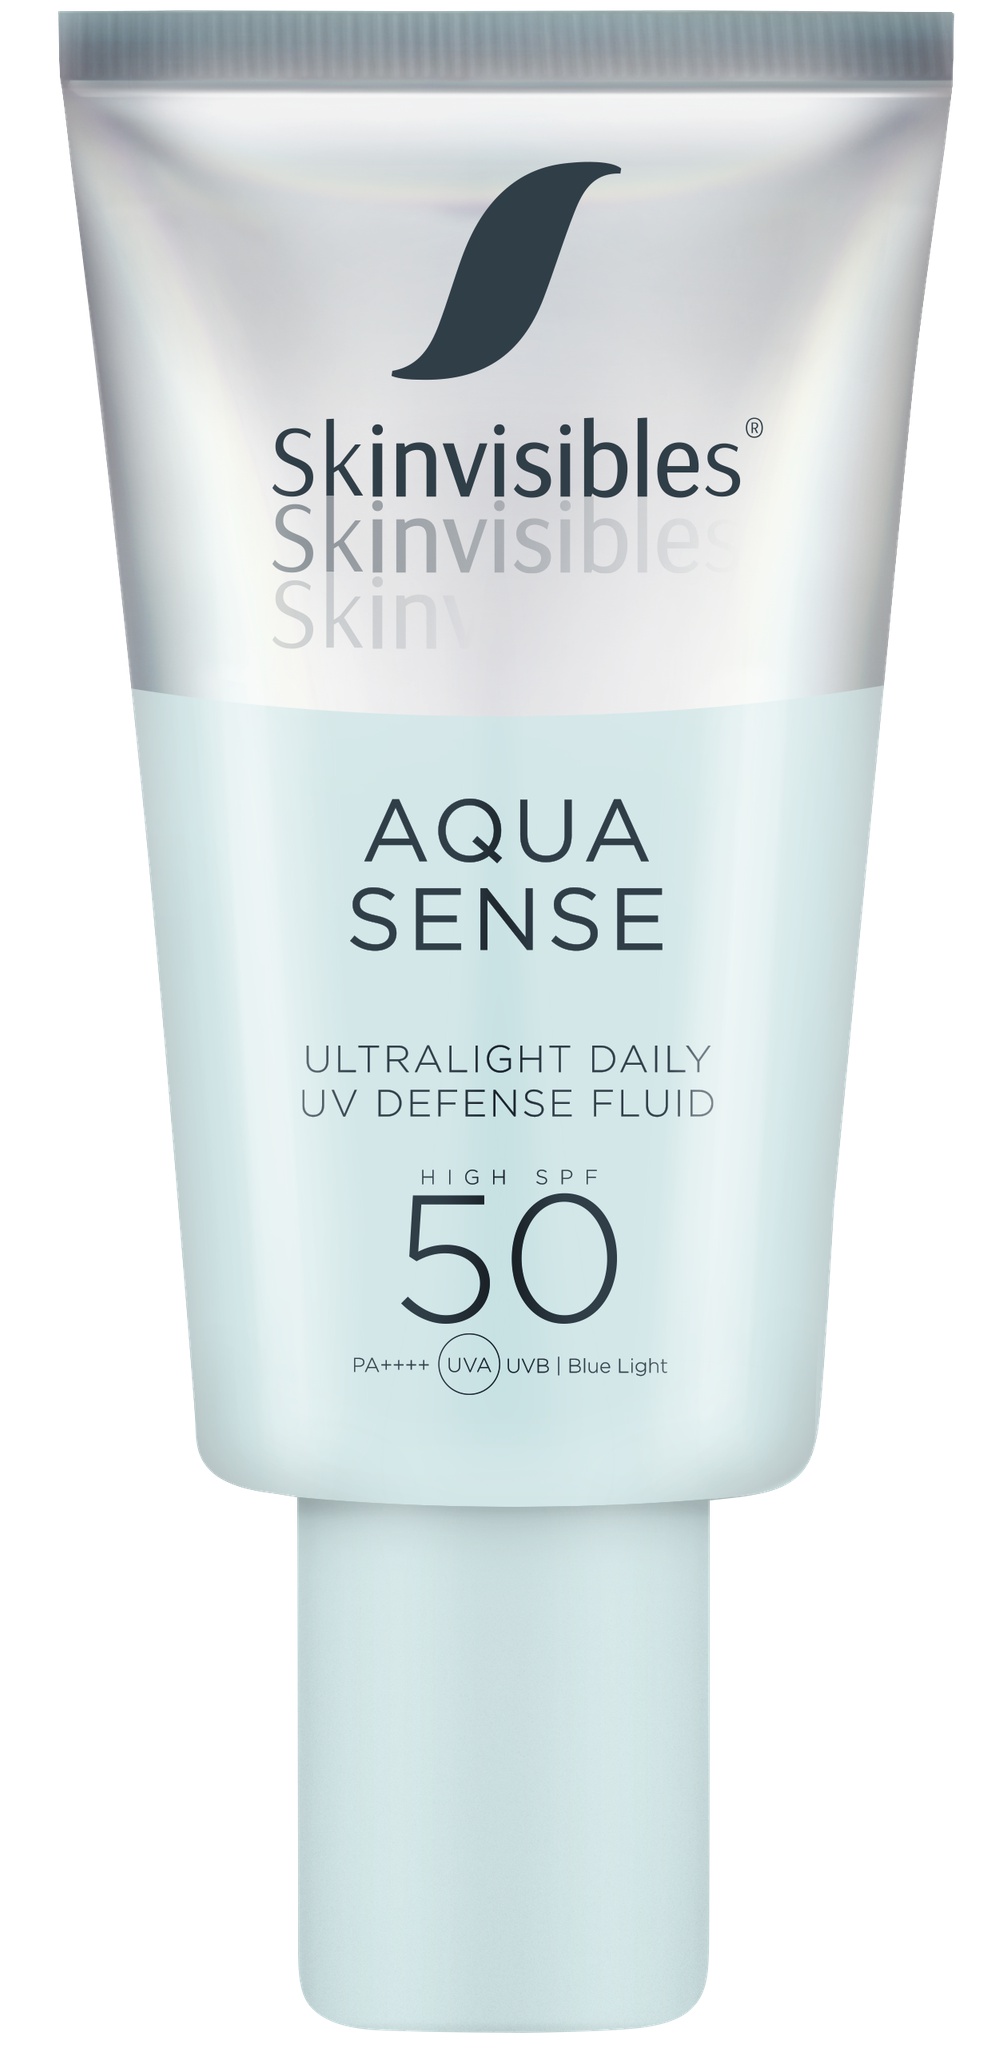 Skinvisibles Aqua Sense Hyaluronic Ultralight Daily UV Defense Fluid SPF 50